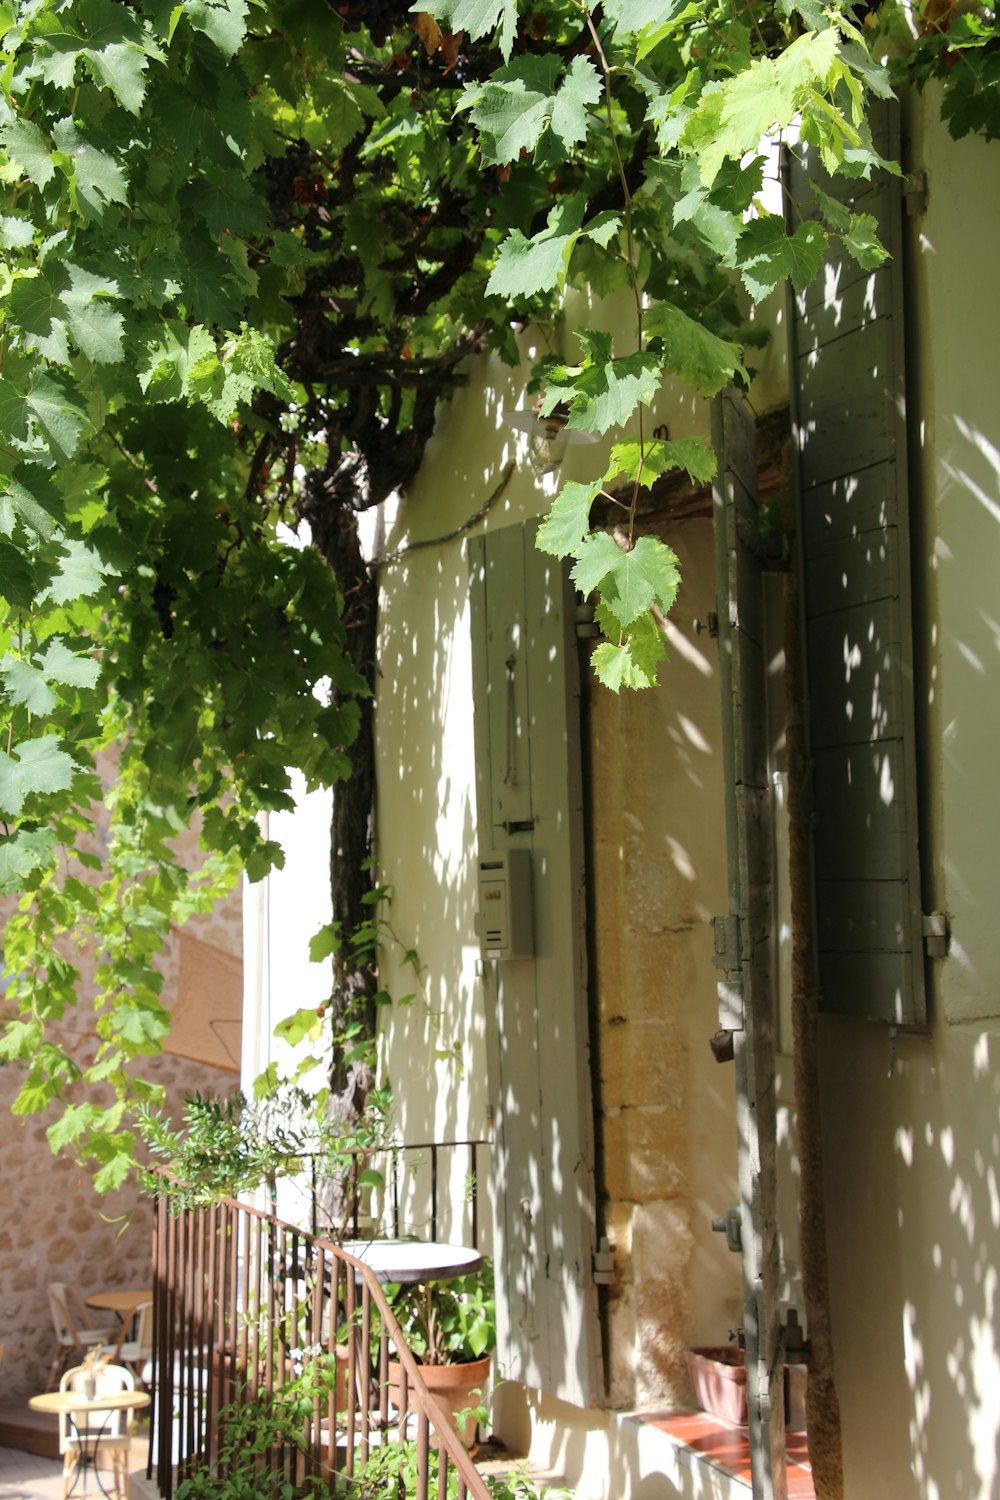 a door with vines growing on it